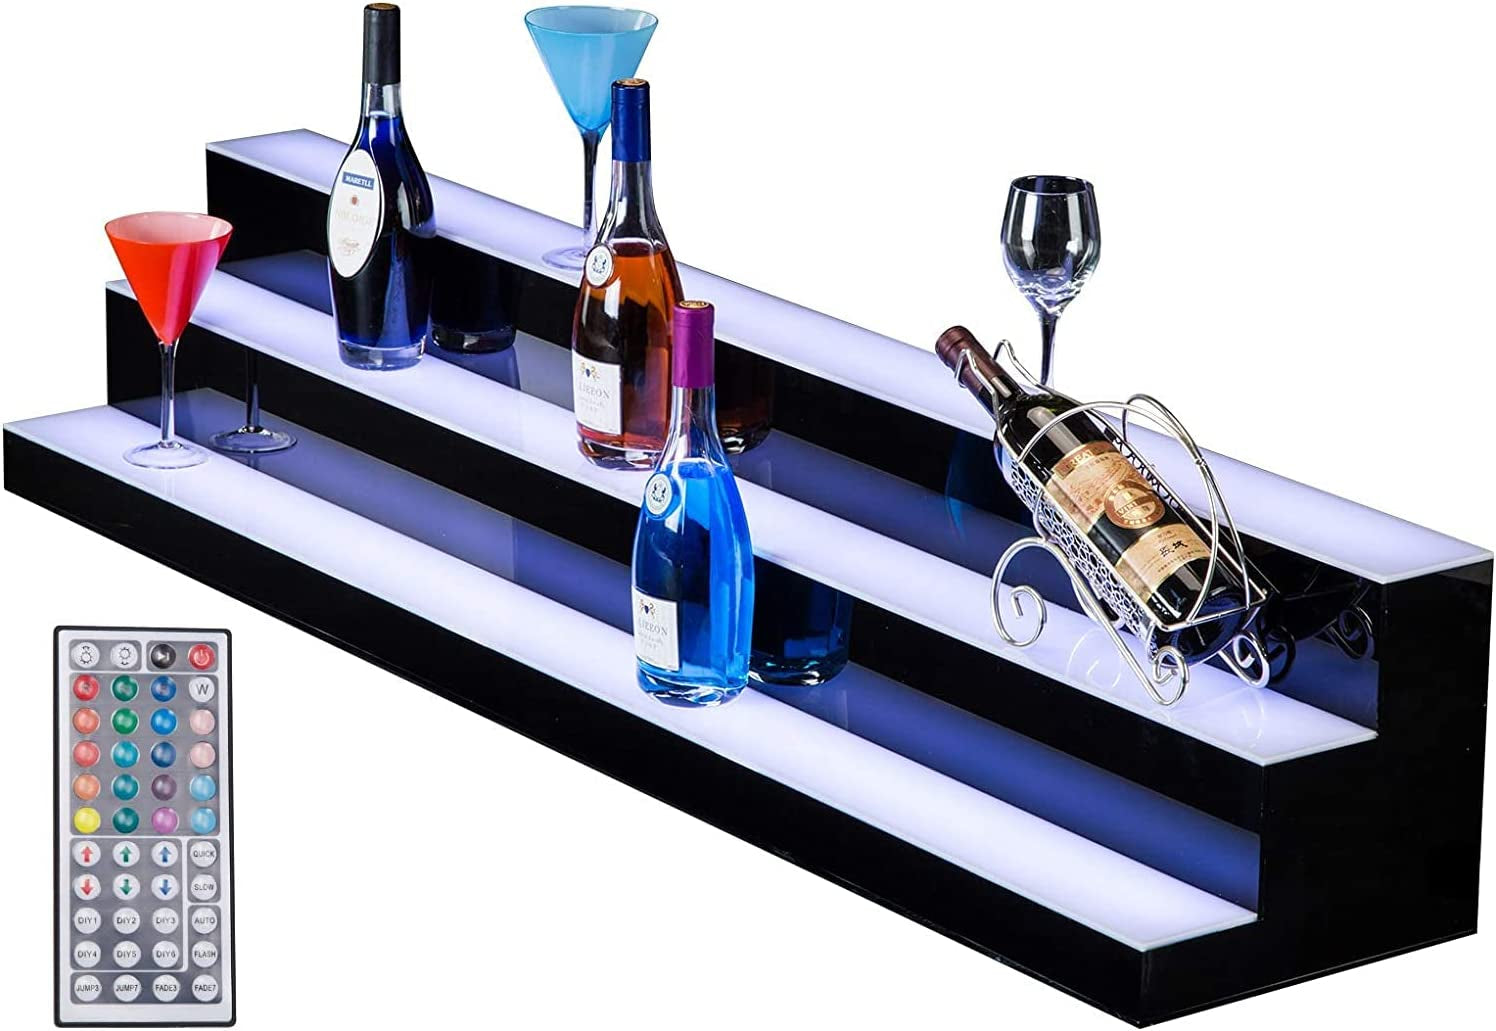 LED Lighted Liquor Bottle Display Shelf, 30 in 2 Step LED Lighted Bar Shelf for Home Commercial Bar Drinks Acrylic Lighting Shelves High Gloss Black Finish with Remote Control